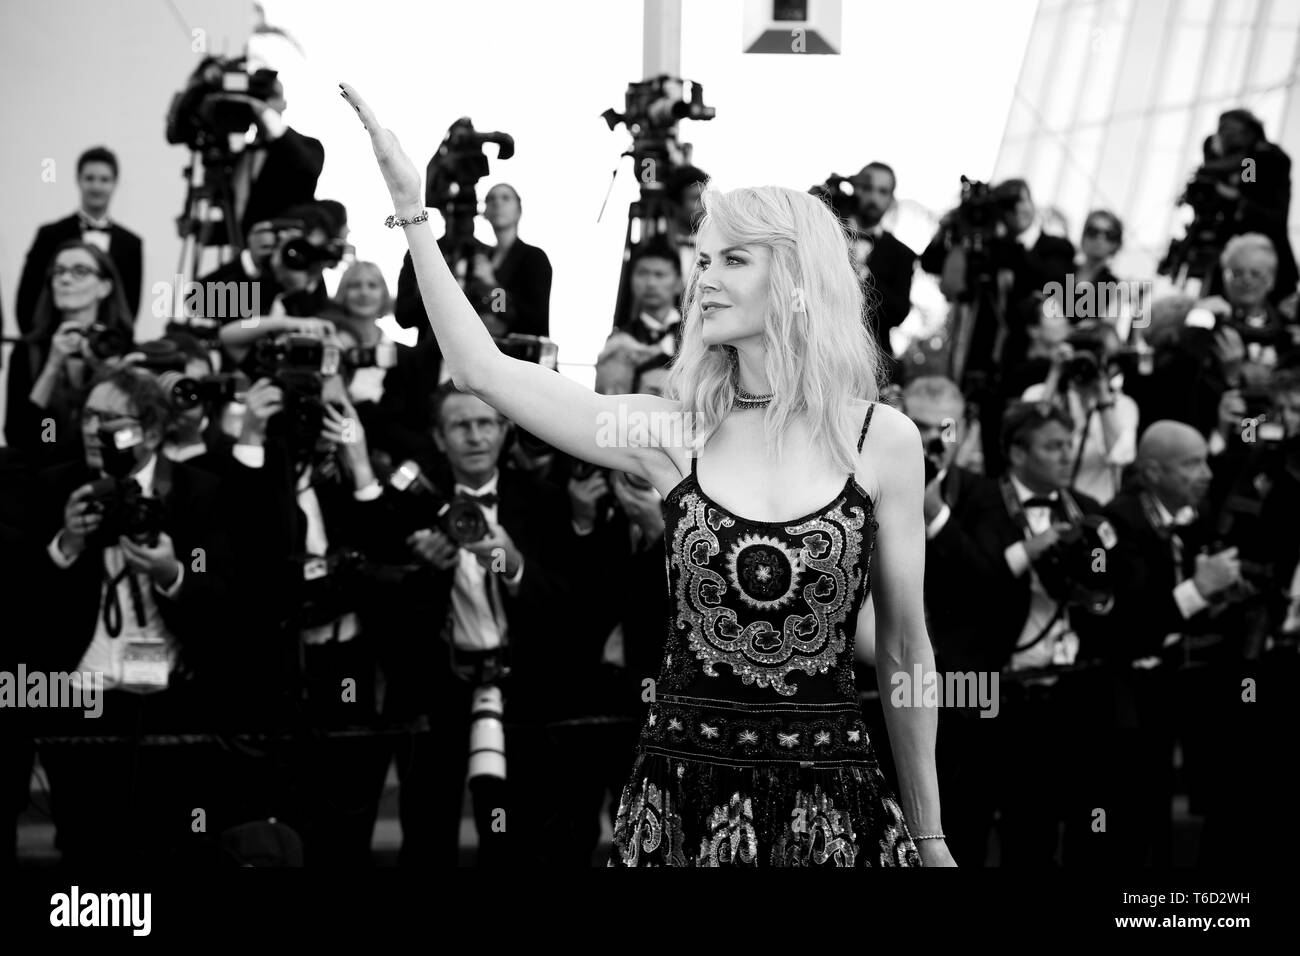 CANNES, Frankreich - 23. MAI 2017: Nicole Kidman auf dem Cannes Film Festival 70. Jahrestag Feier Red Carpet (Foto: Mickael Chavet) Stockfoto